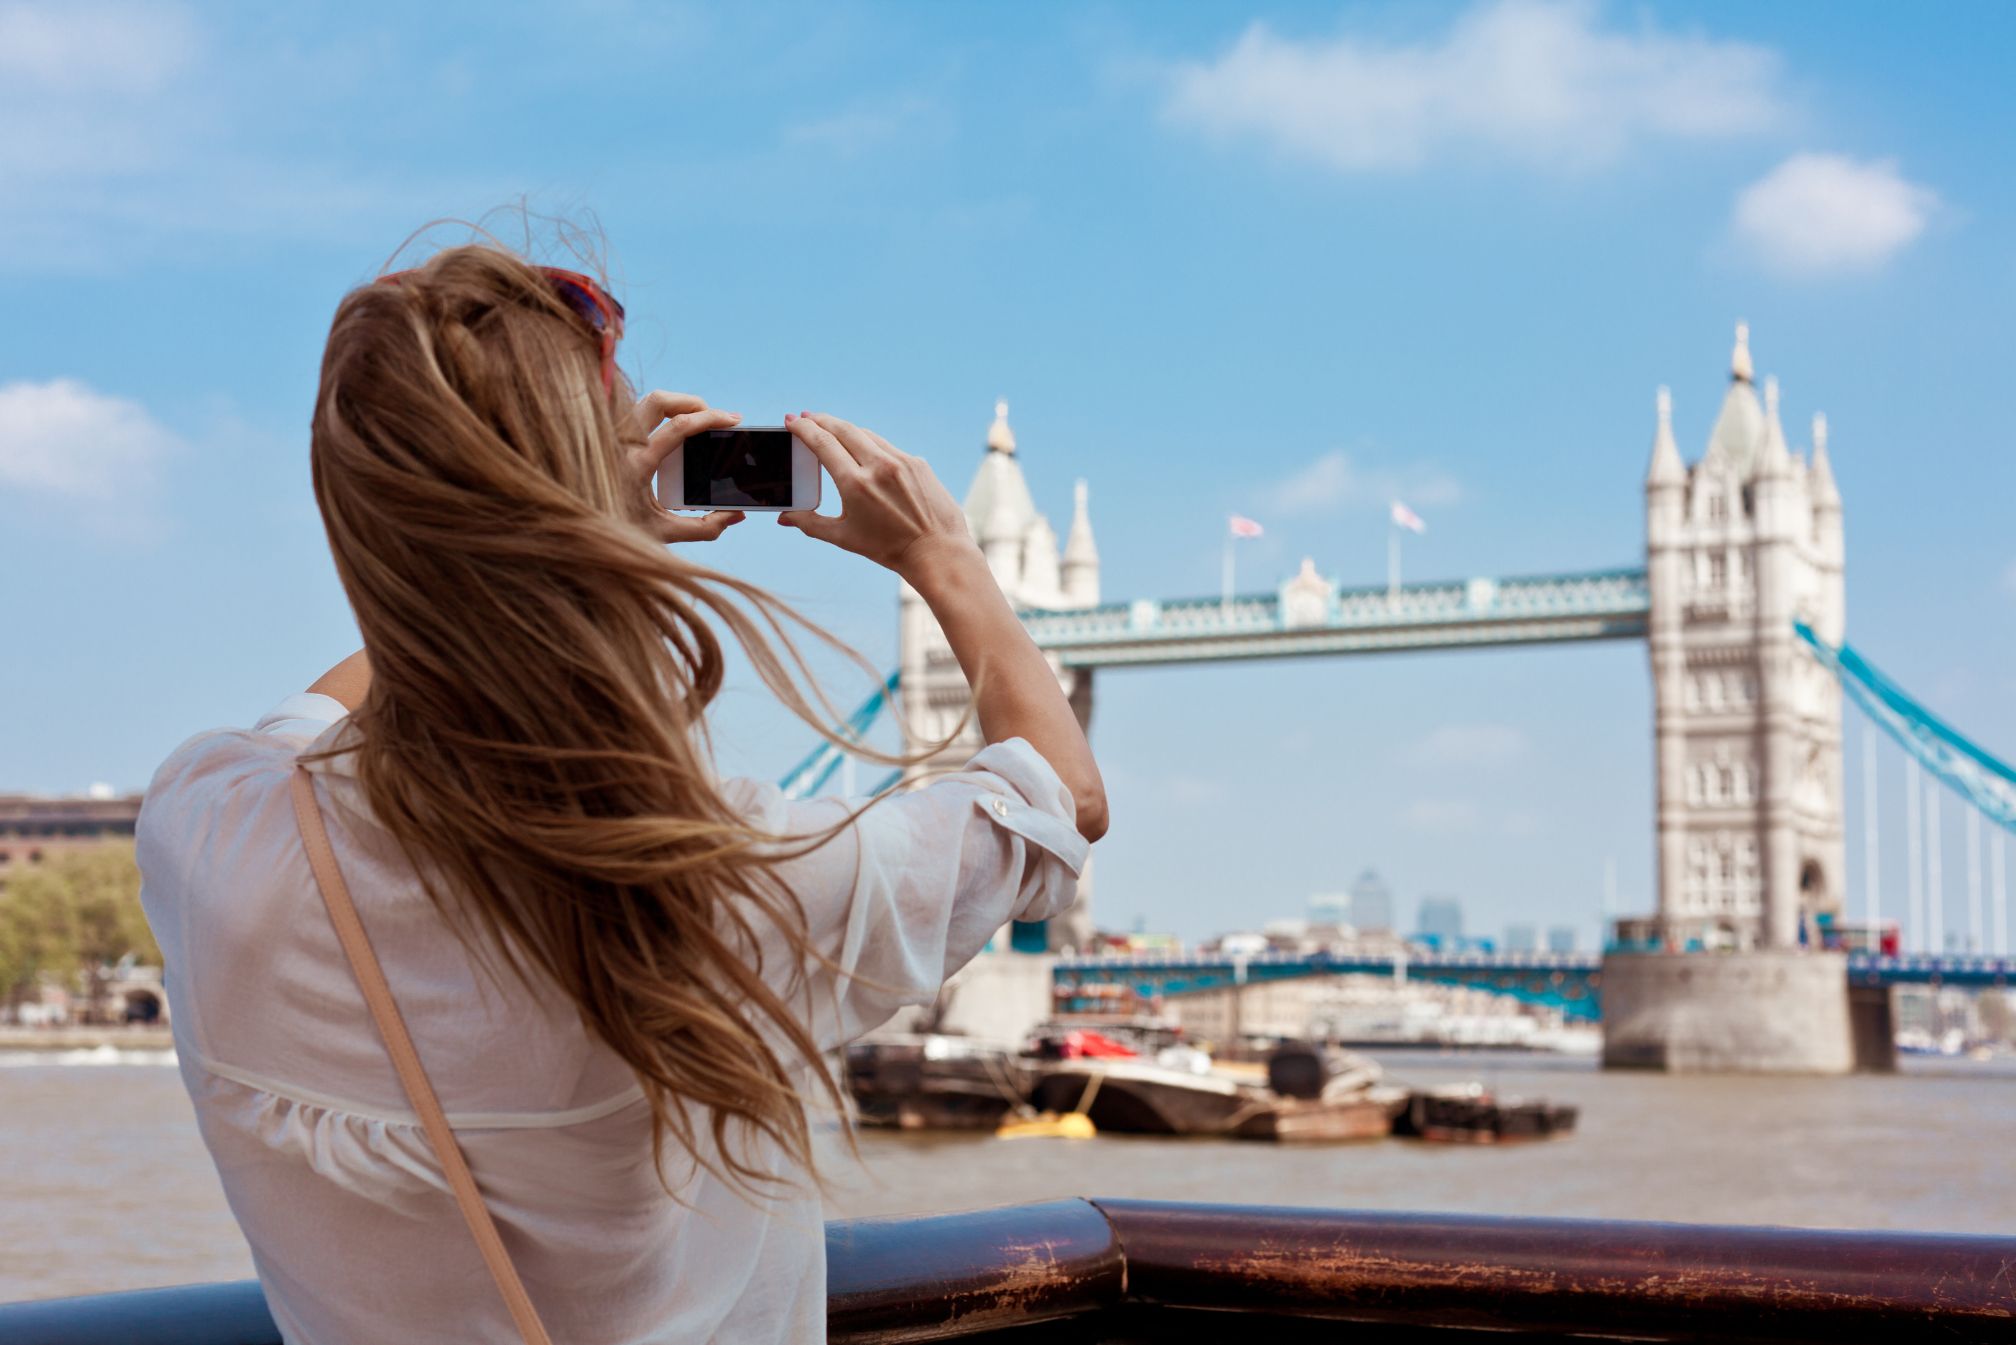 London discover walking tour self-guided smartphone tower bridge London eye